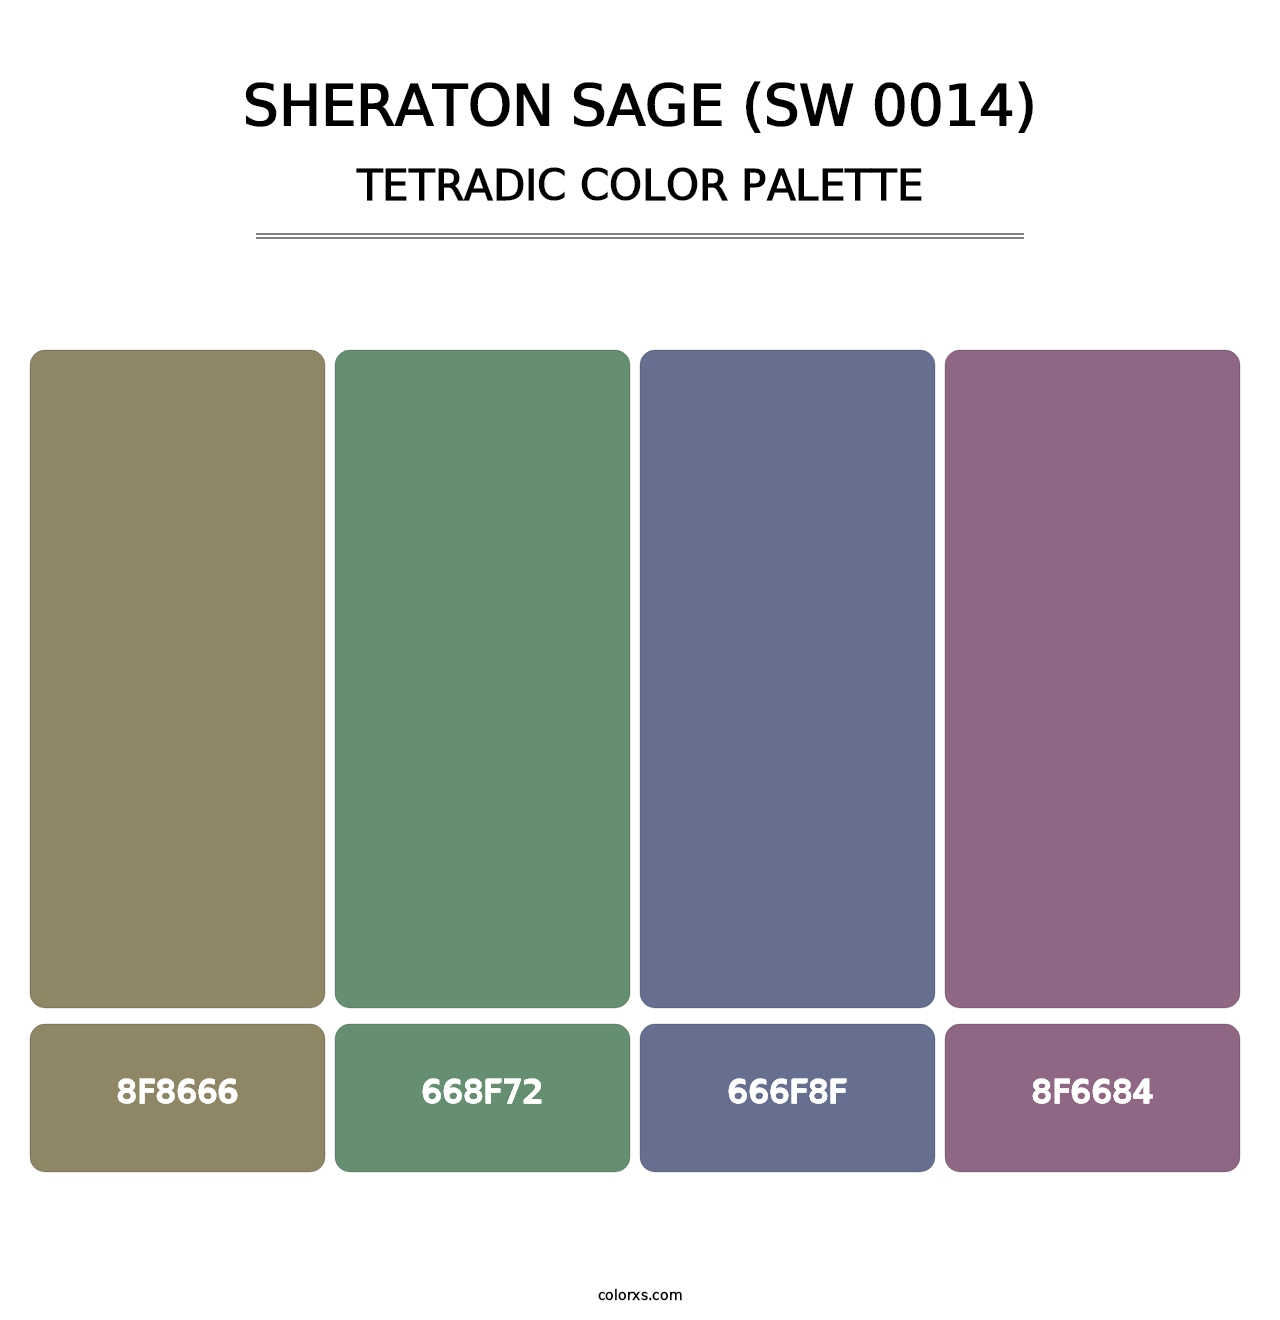 Sheraton Sage (SW 0014) - Tetradic Color Palette